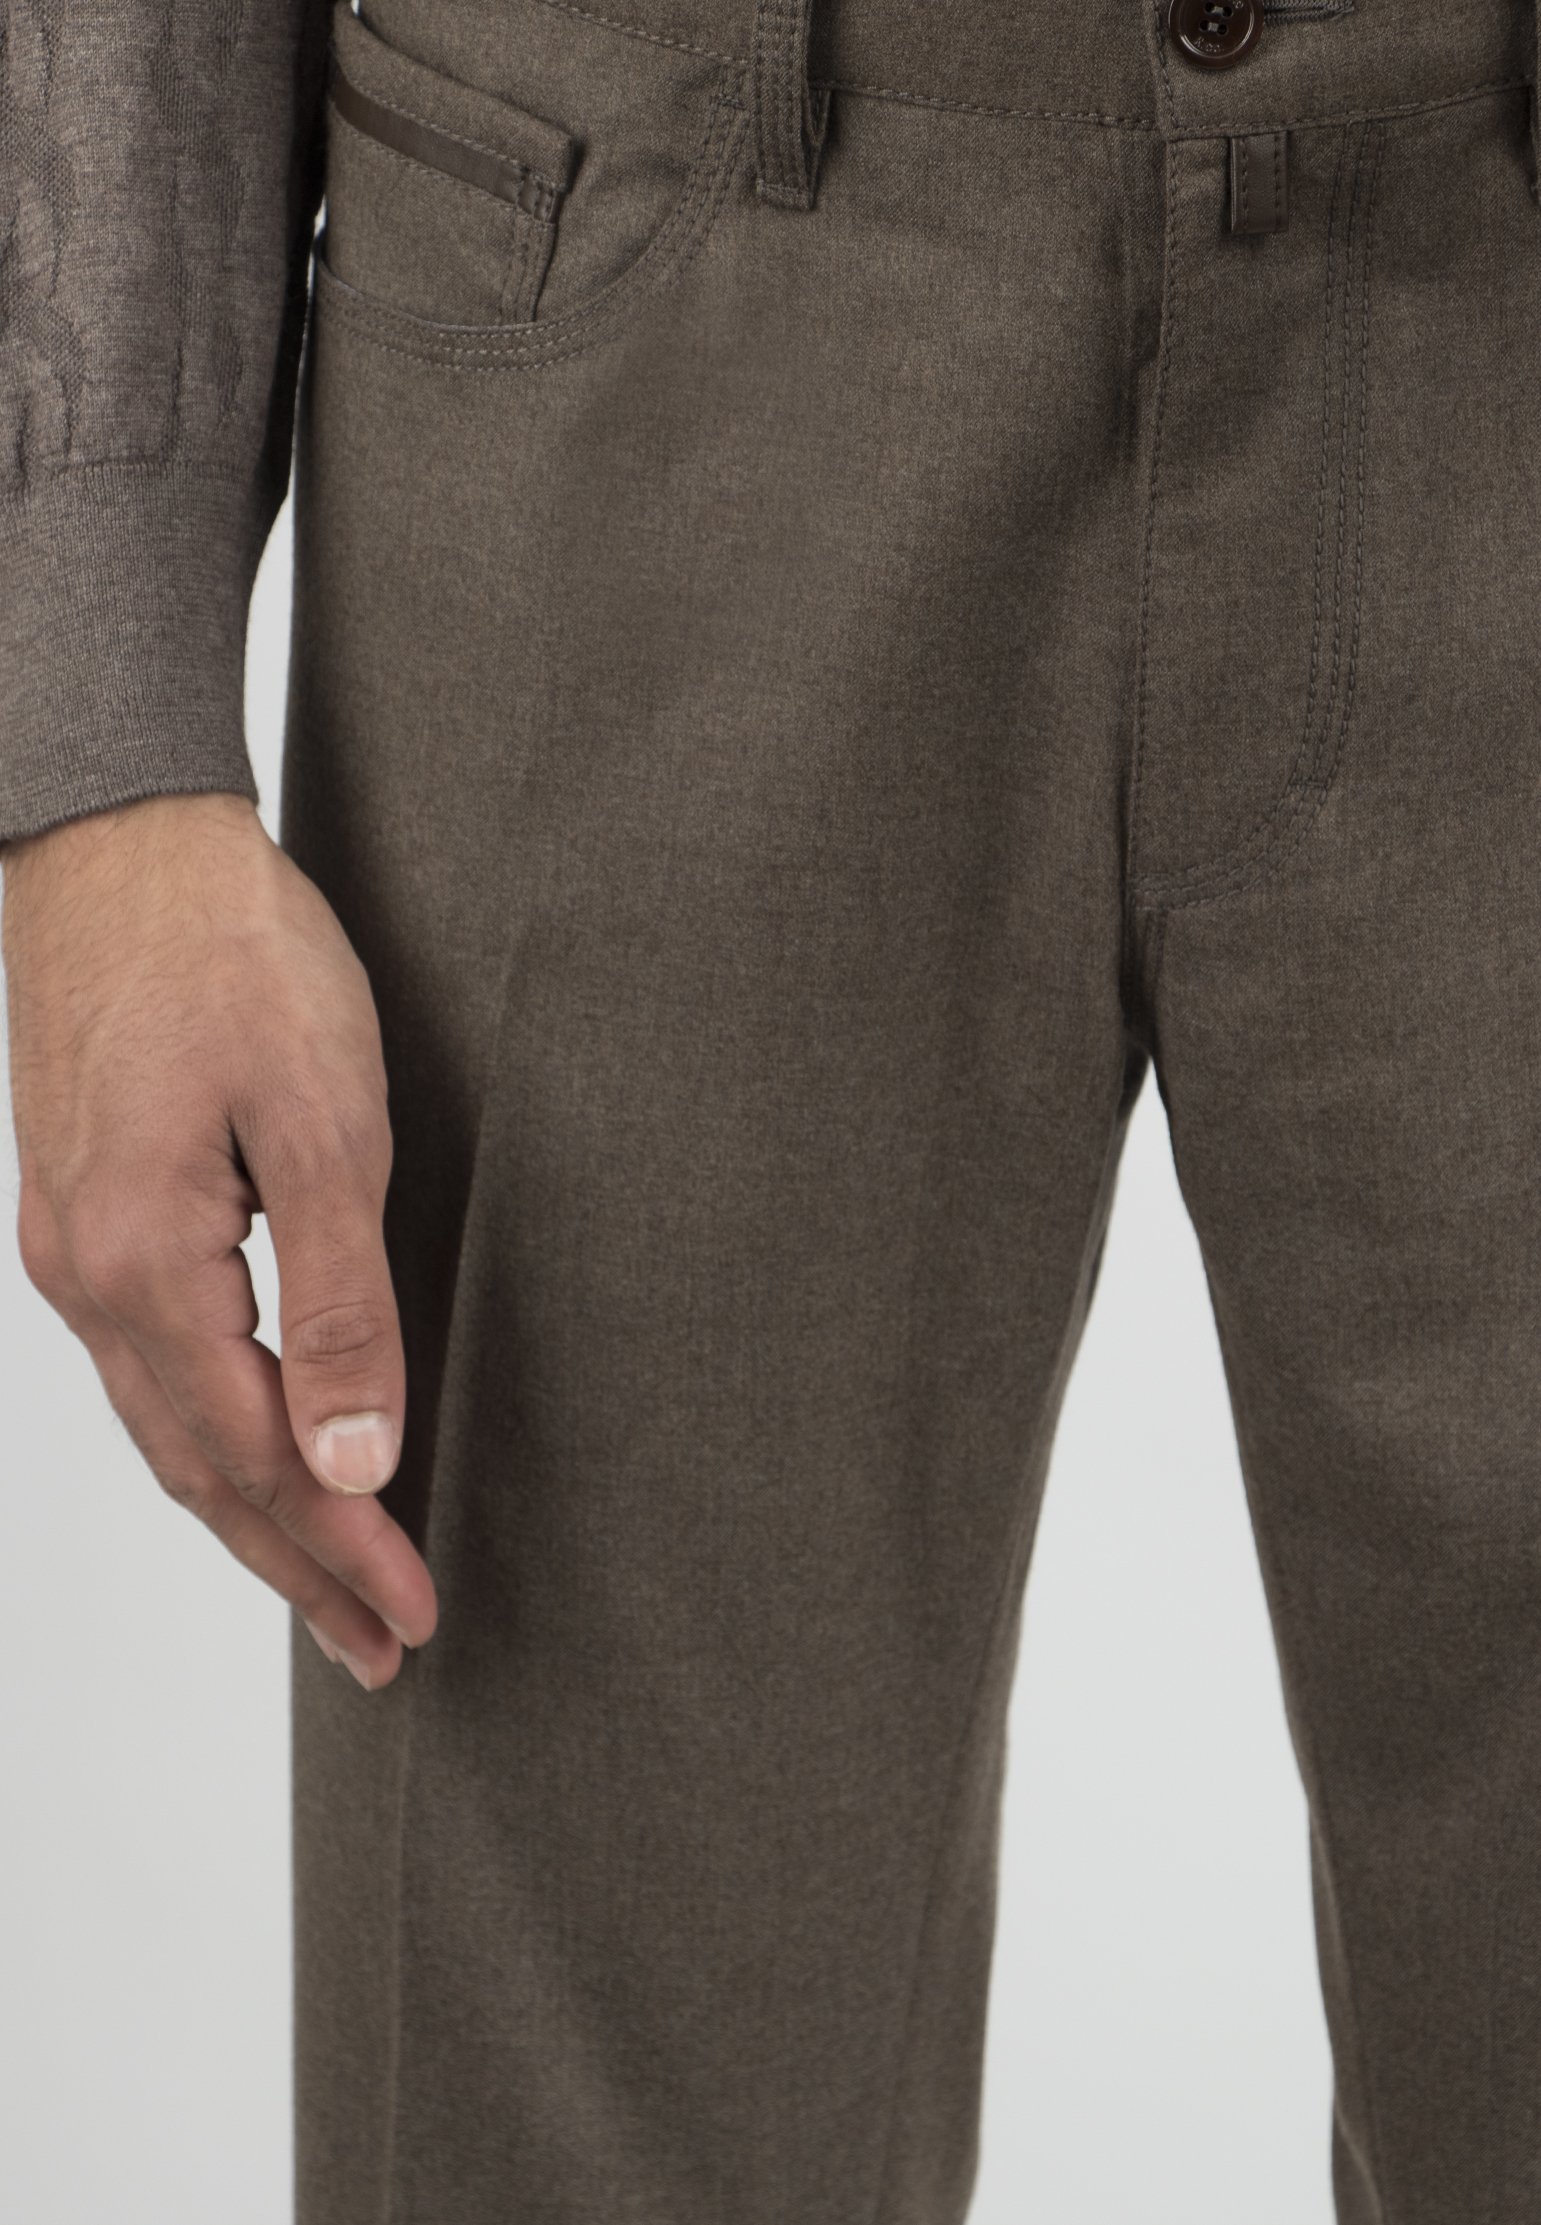 Pants STEFANO RICCI Color: marron (Code: 302) in online store Allure